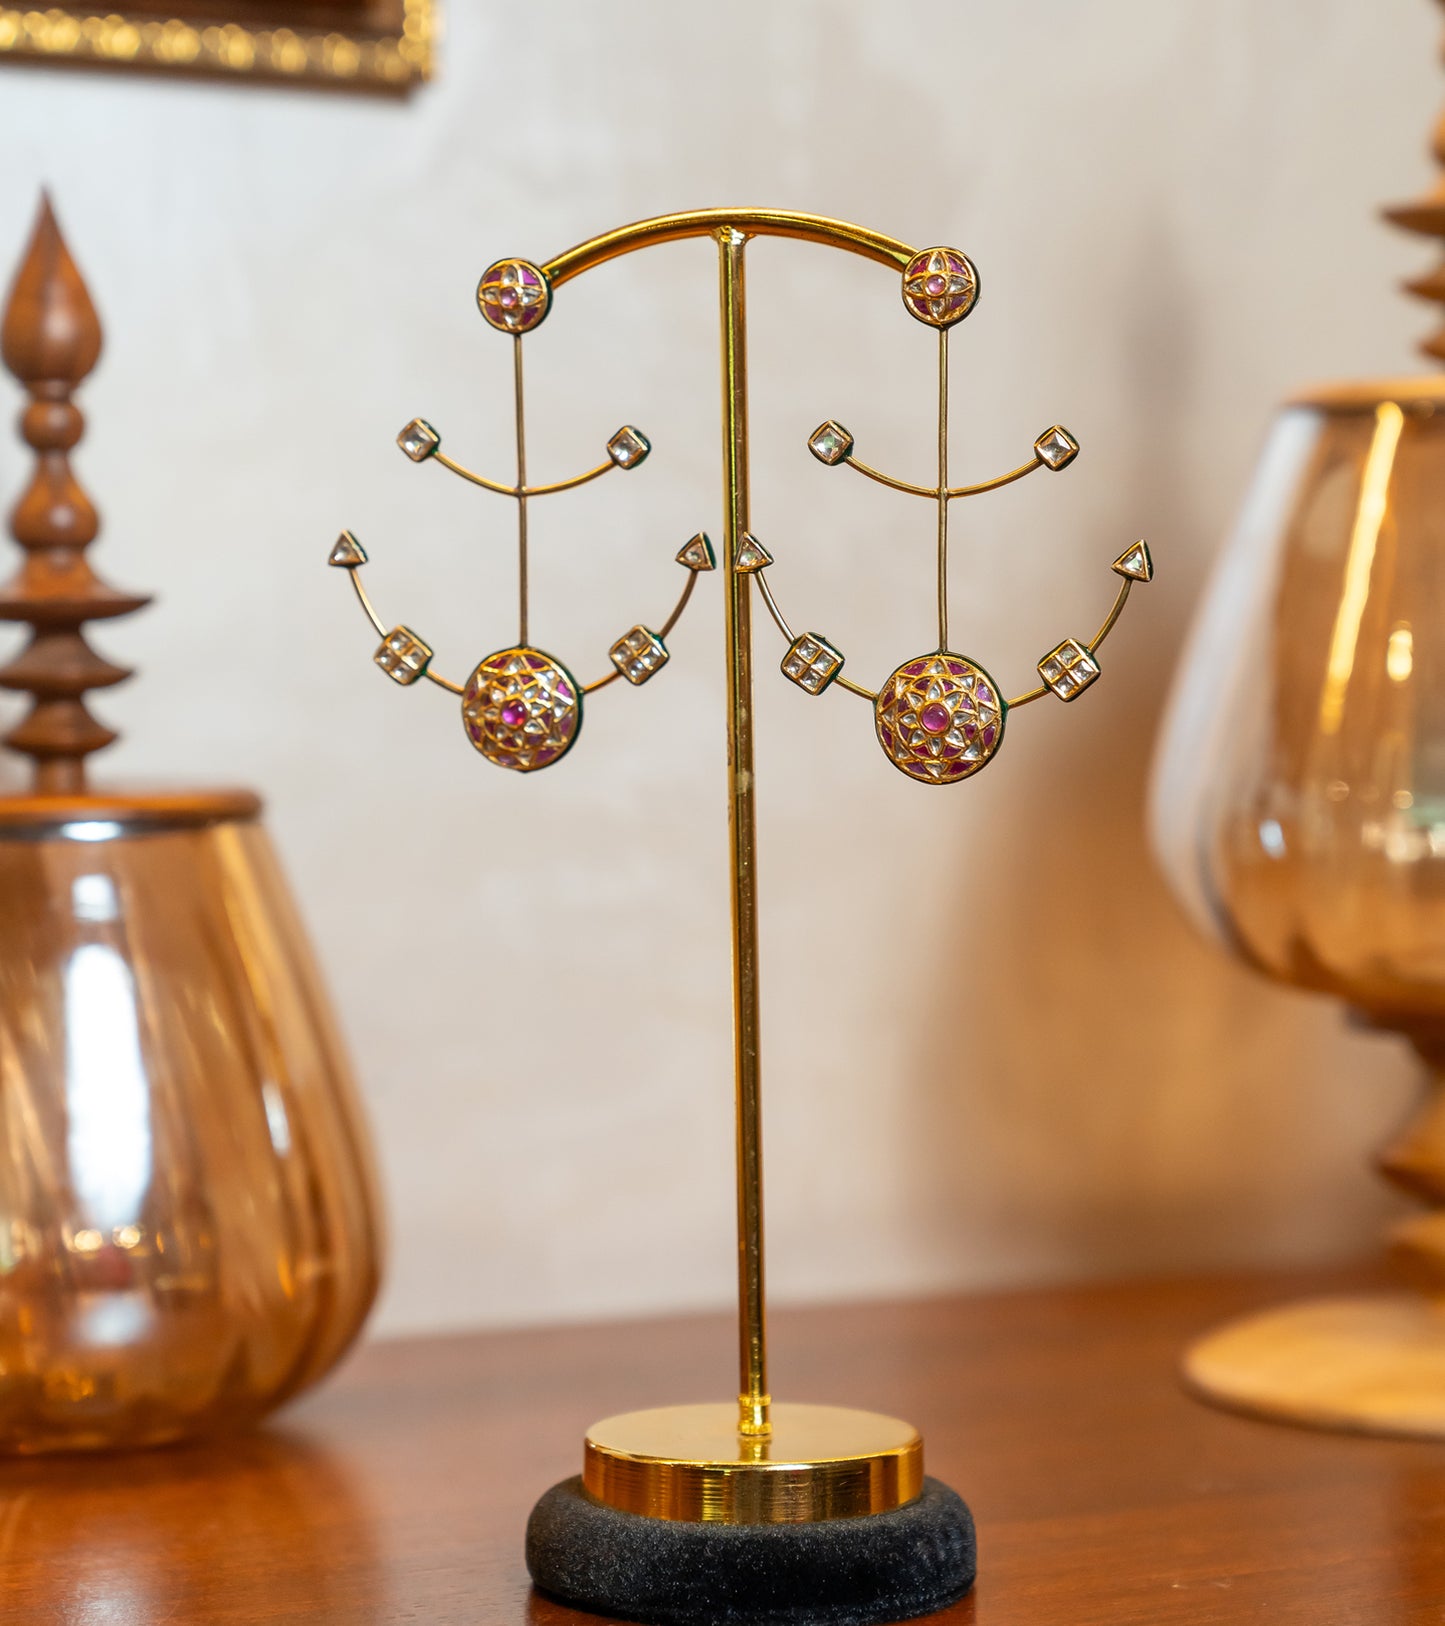 The Raga Polki Earrings in Gold-Festive Jewelry